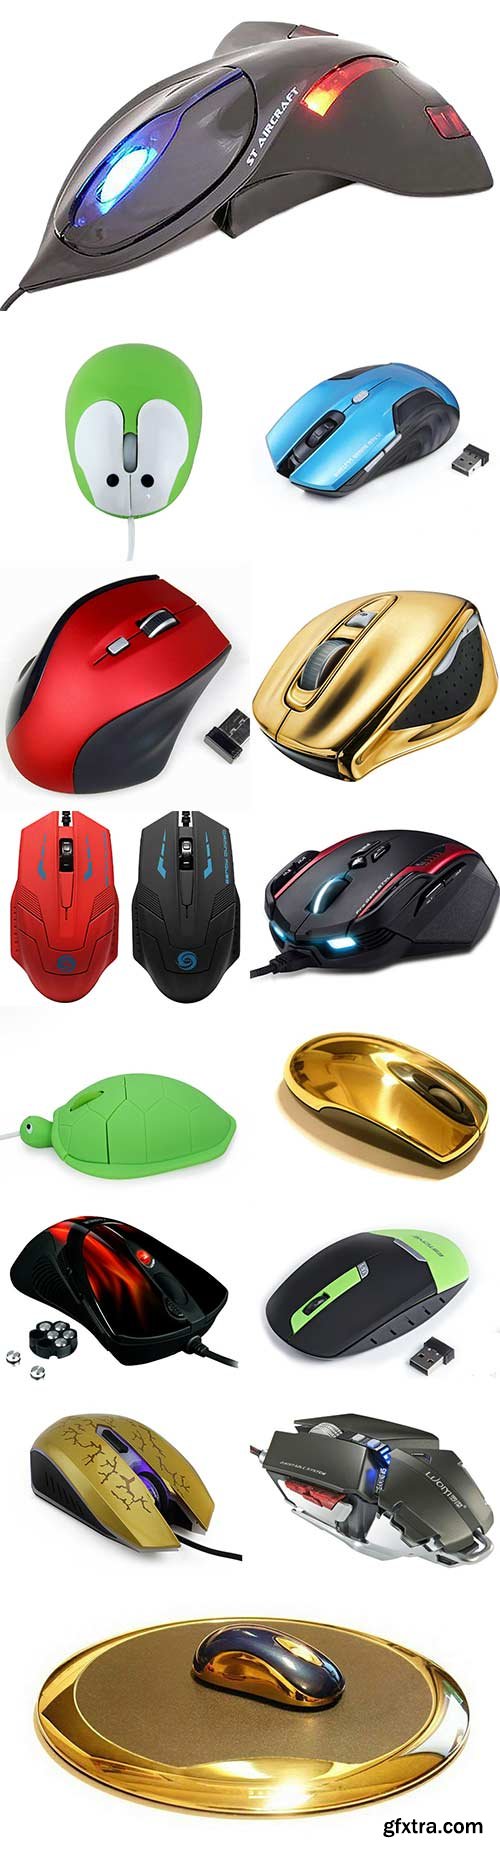 Computer Mouse raster graphics